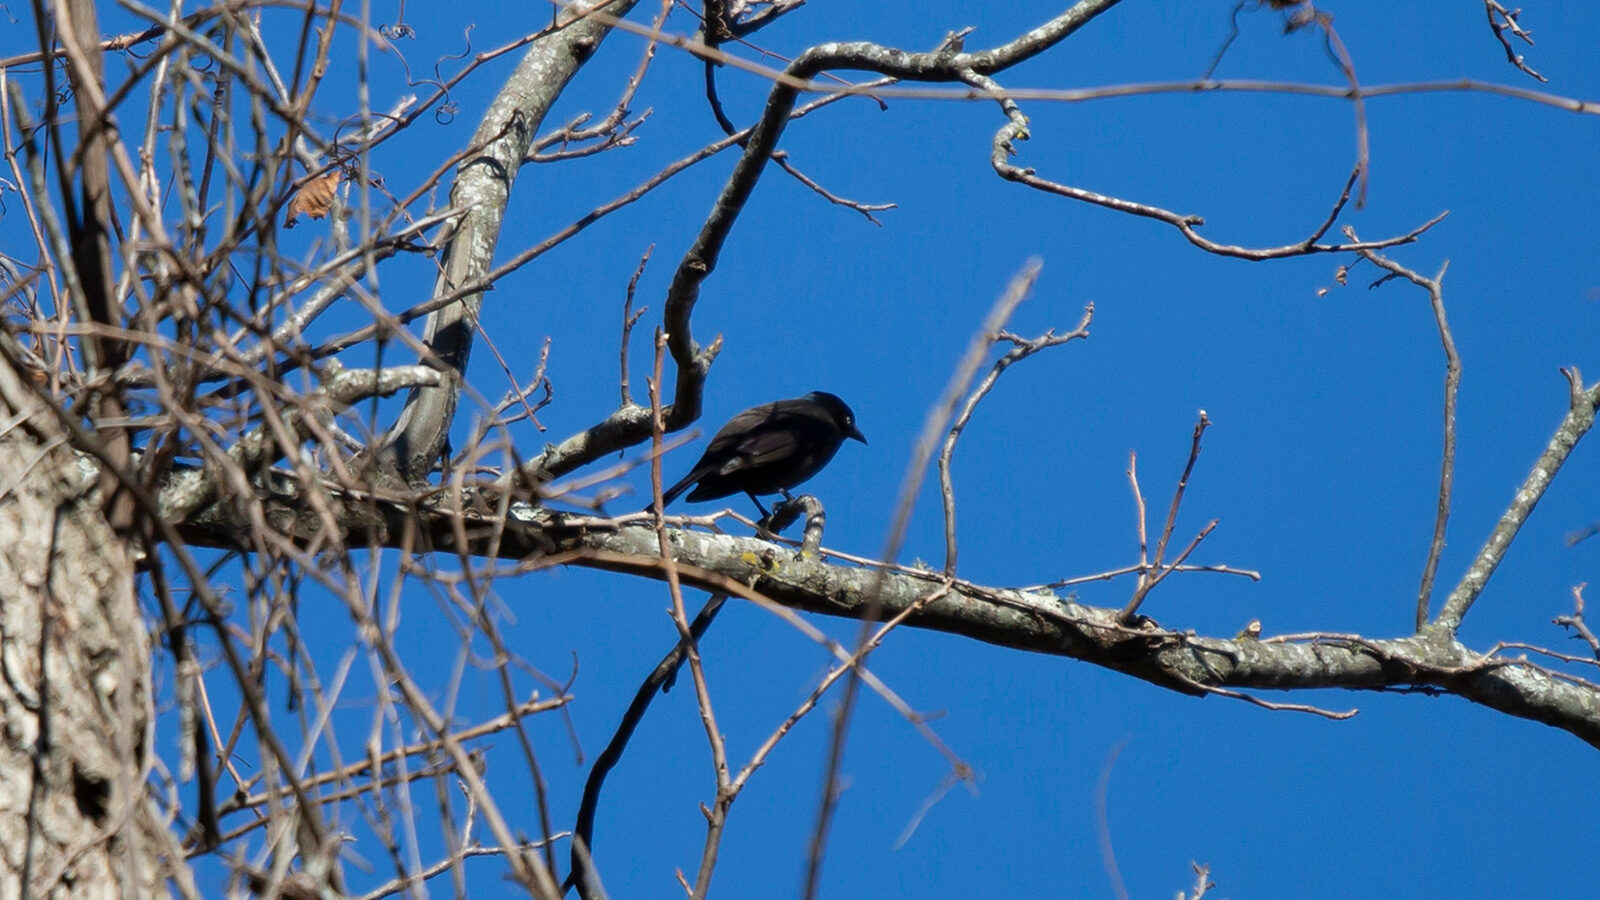 Male Brewer's blackbird perched on a bare limb